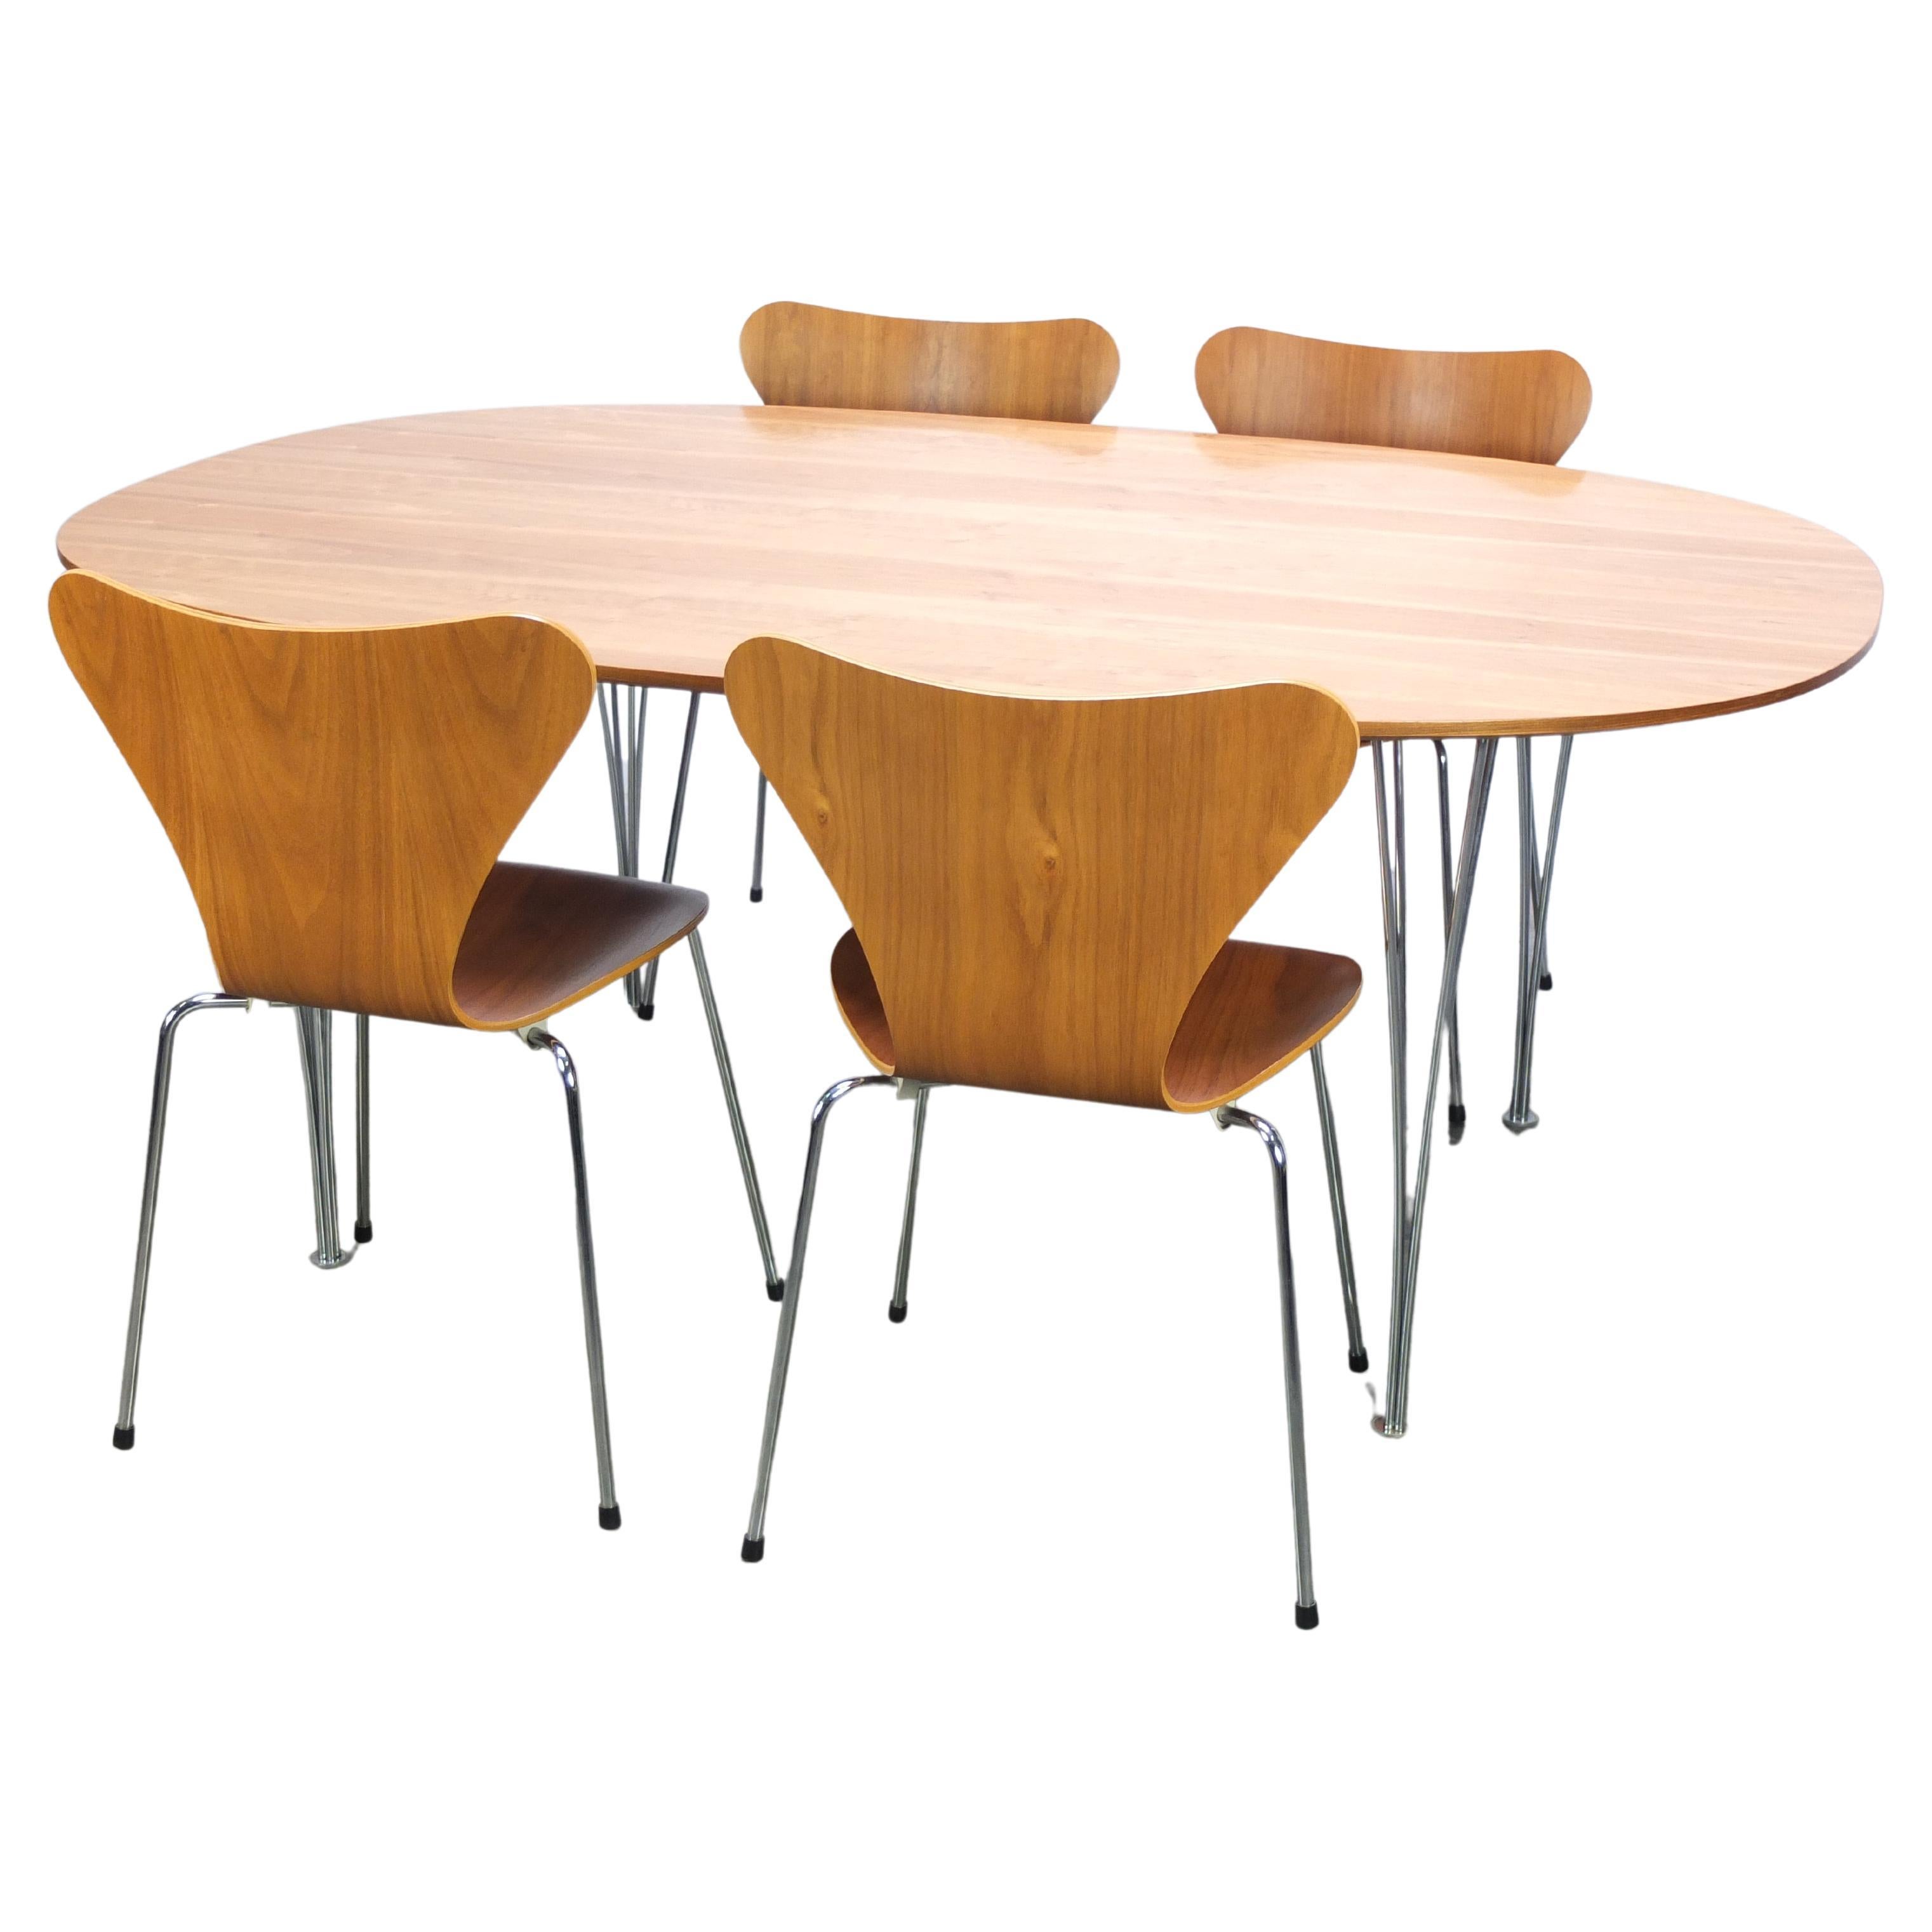 Arne Jacobsen Series 7 Chair